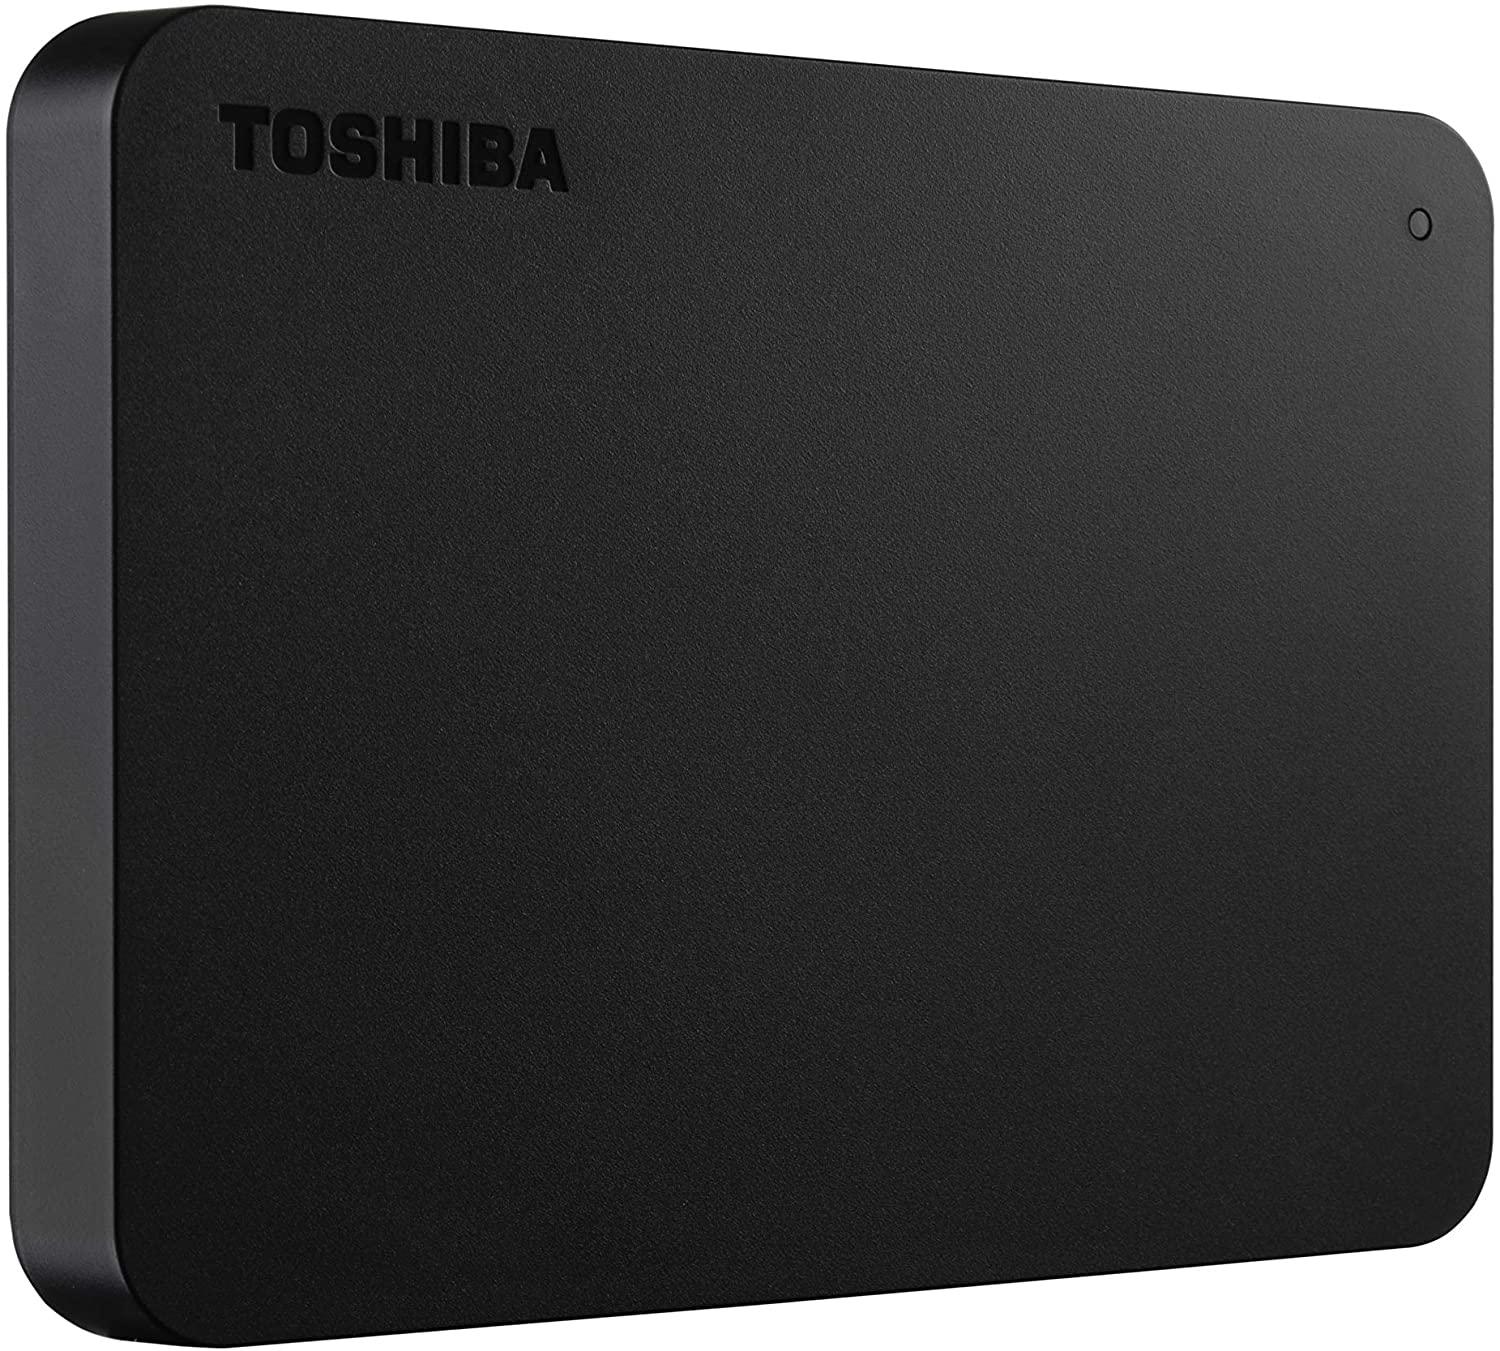 Toshiba Canvio Basics discos duros